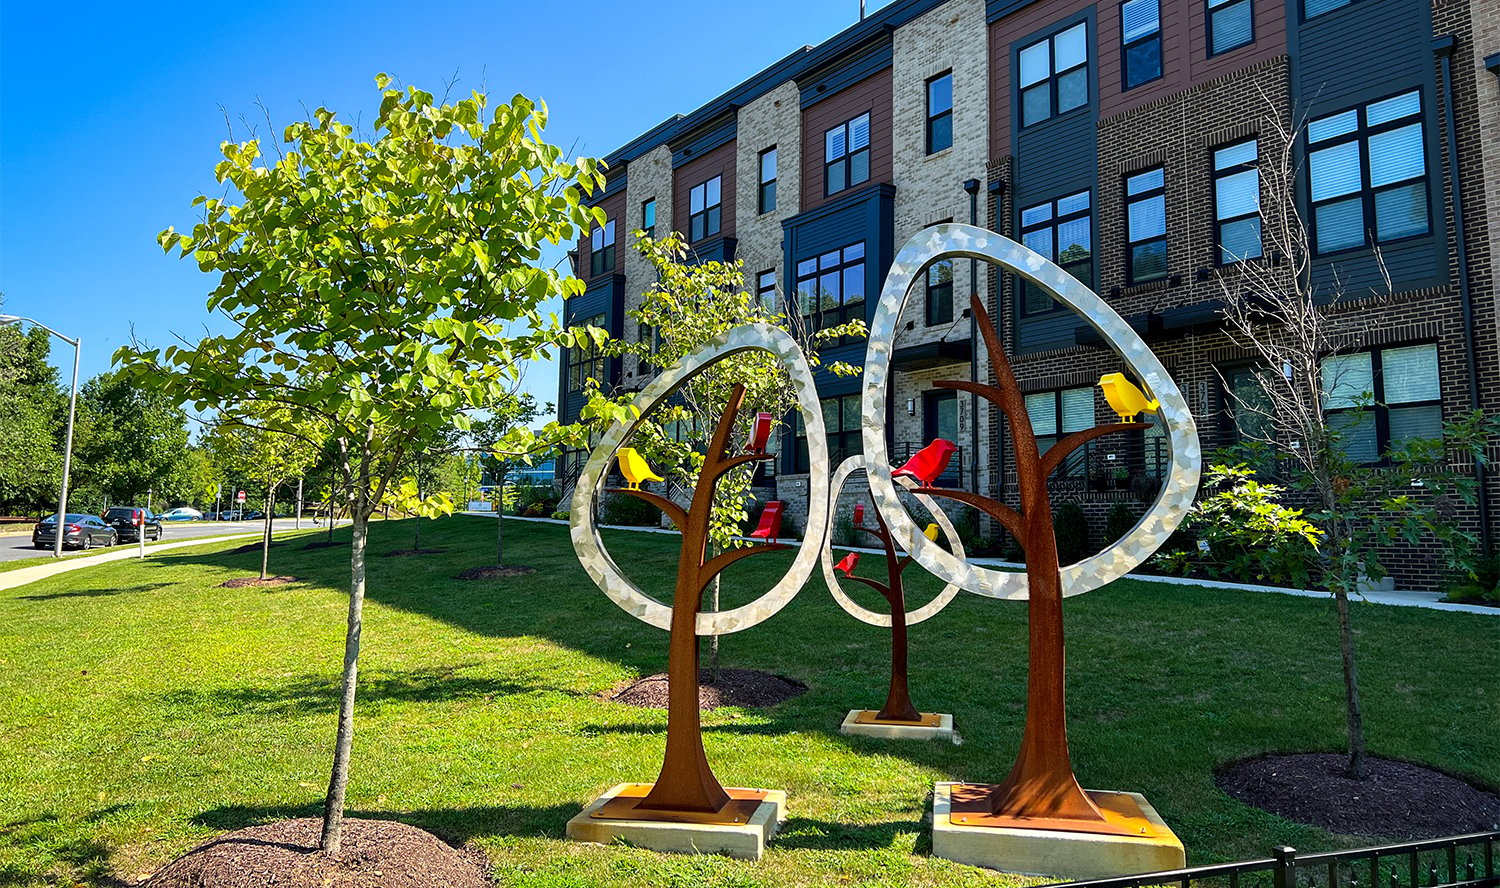 How sculptures enhance a sense of community at Tower Oaks